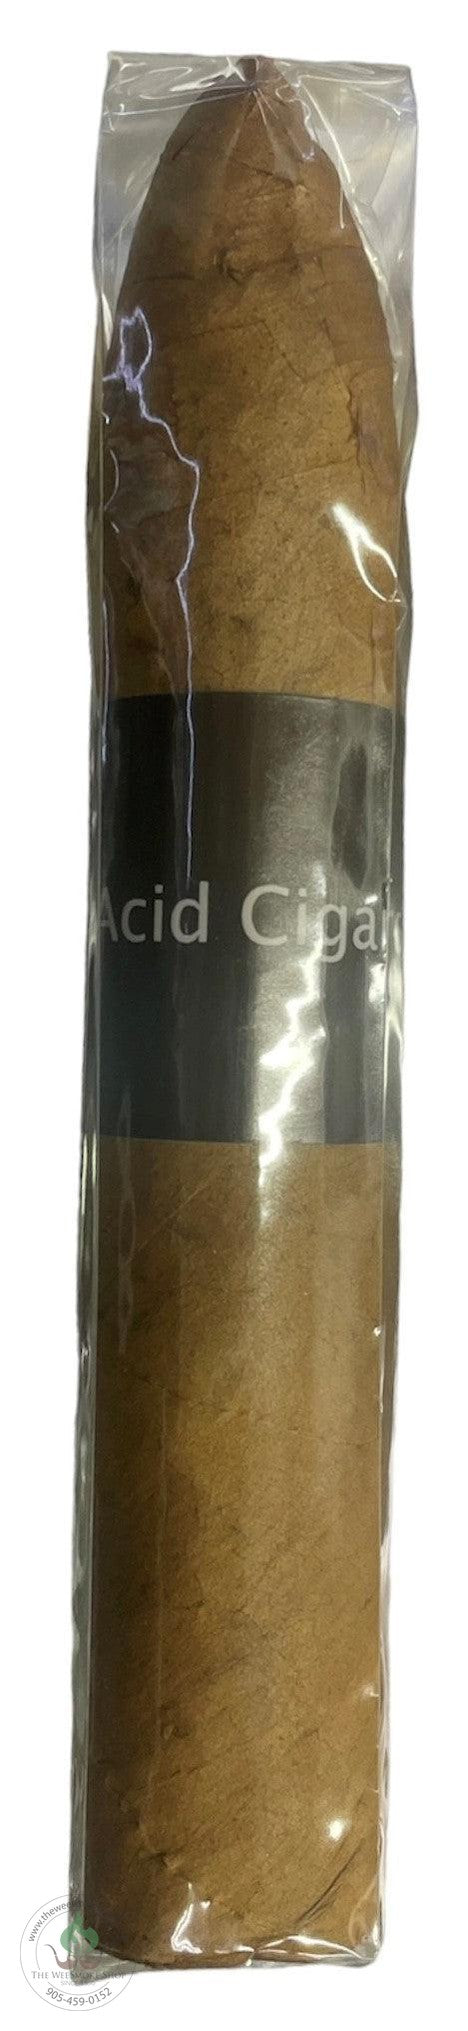 Acid Cigars - Blondie Belicoso - The Wee Smoke Shop